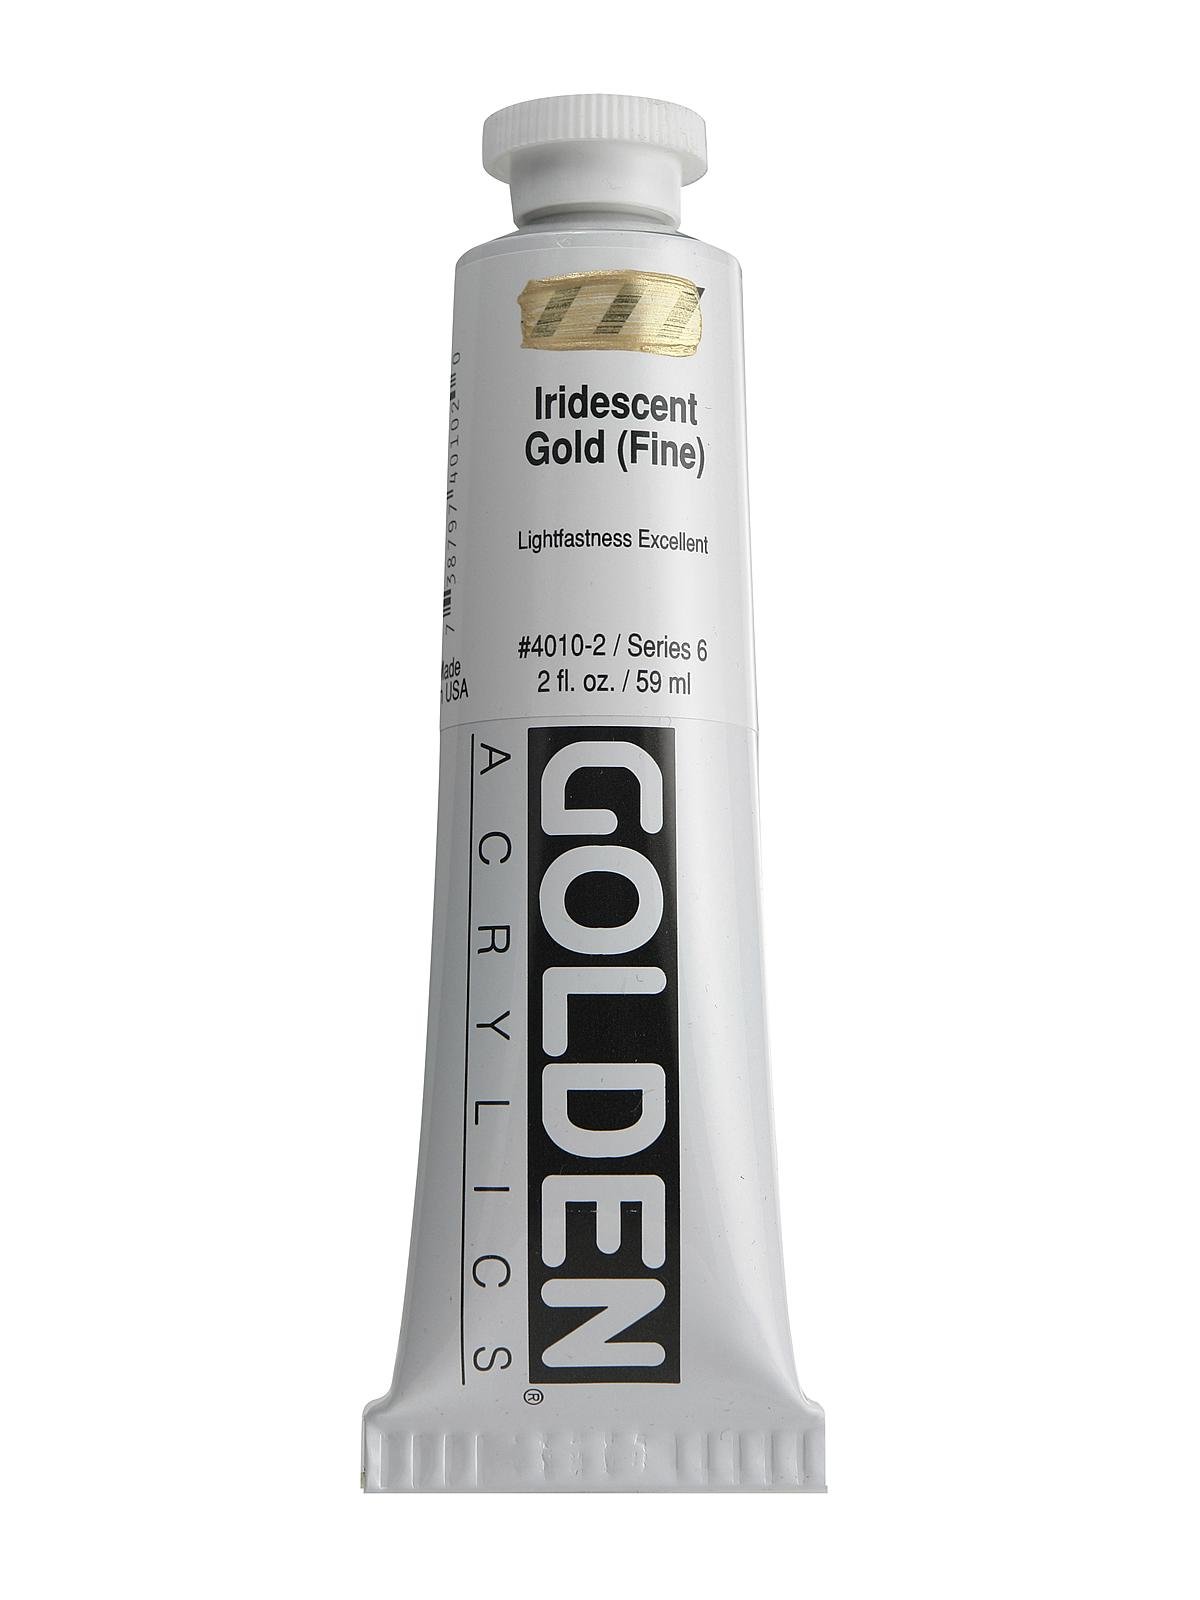 Golden Fluid Acrylic Iridescent Bright Gold (Fine) 32 oz 